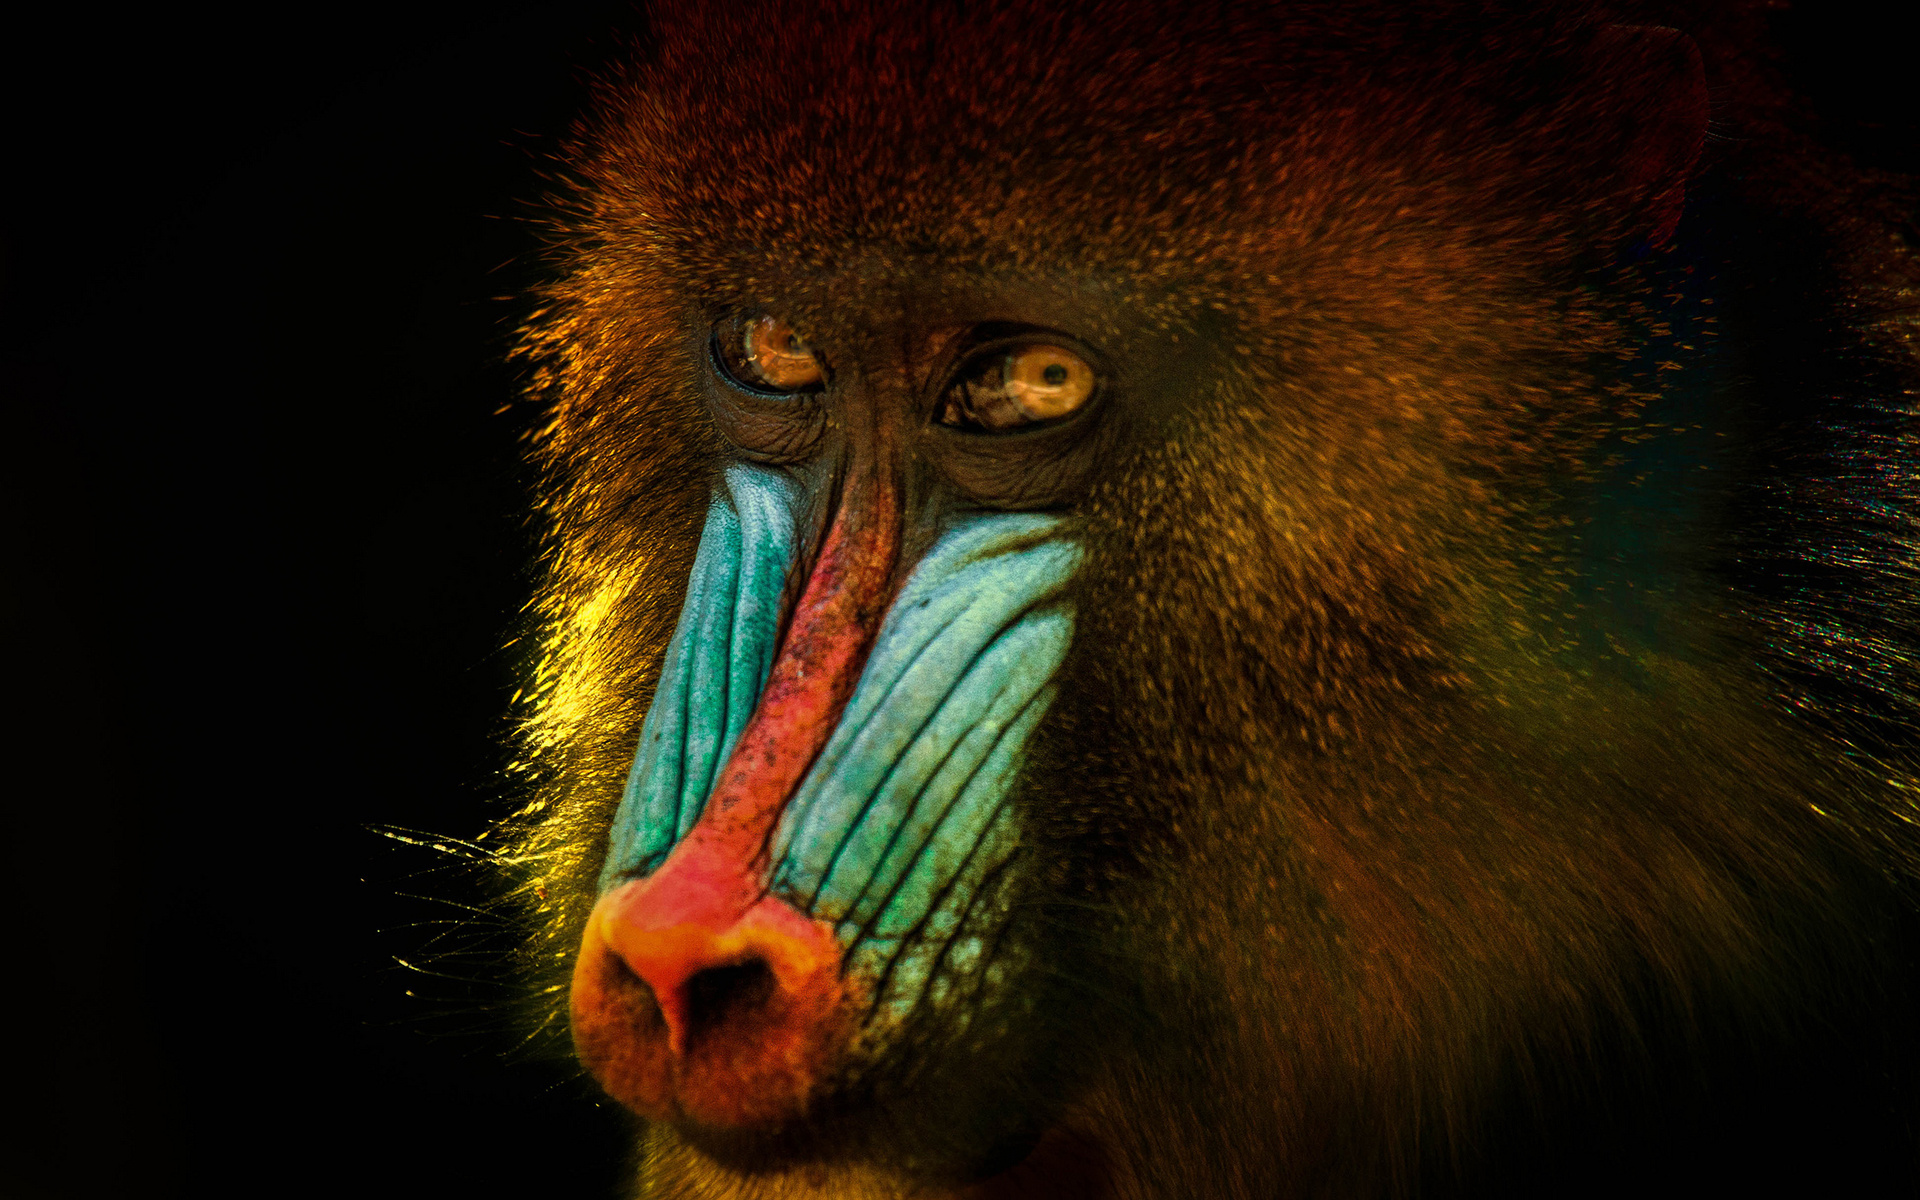 Mandrill face close-up, Monkey kingdom charm, HD wildlife wallpaper, Desktop backgrounds, 1920x1200 HD Desktop